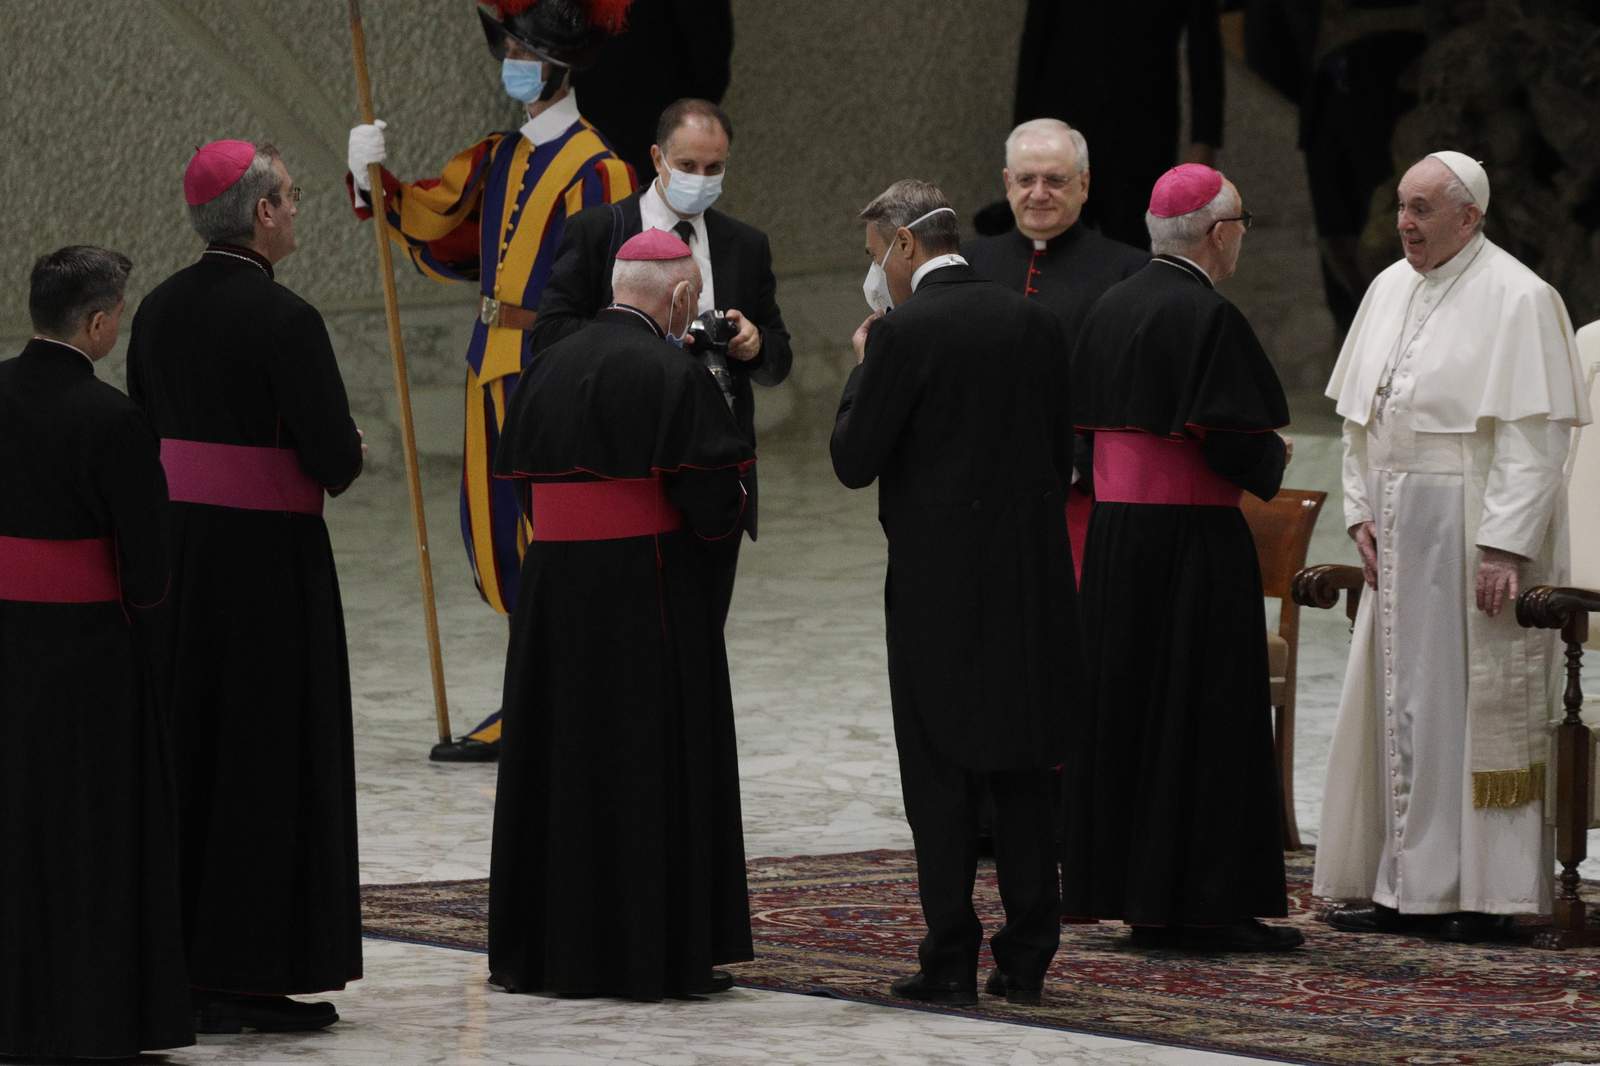 Fiasco over pope's cut civil union quote intensifies impact